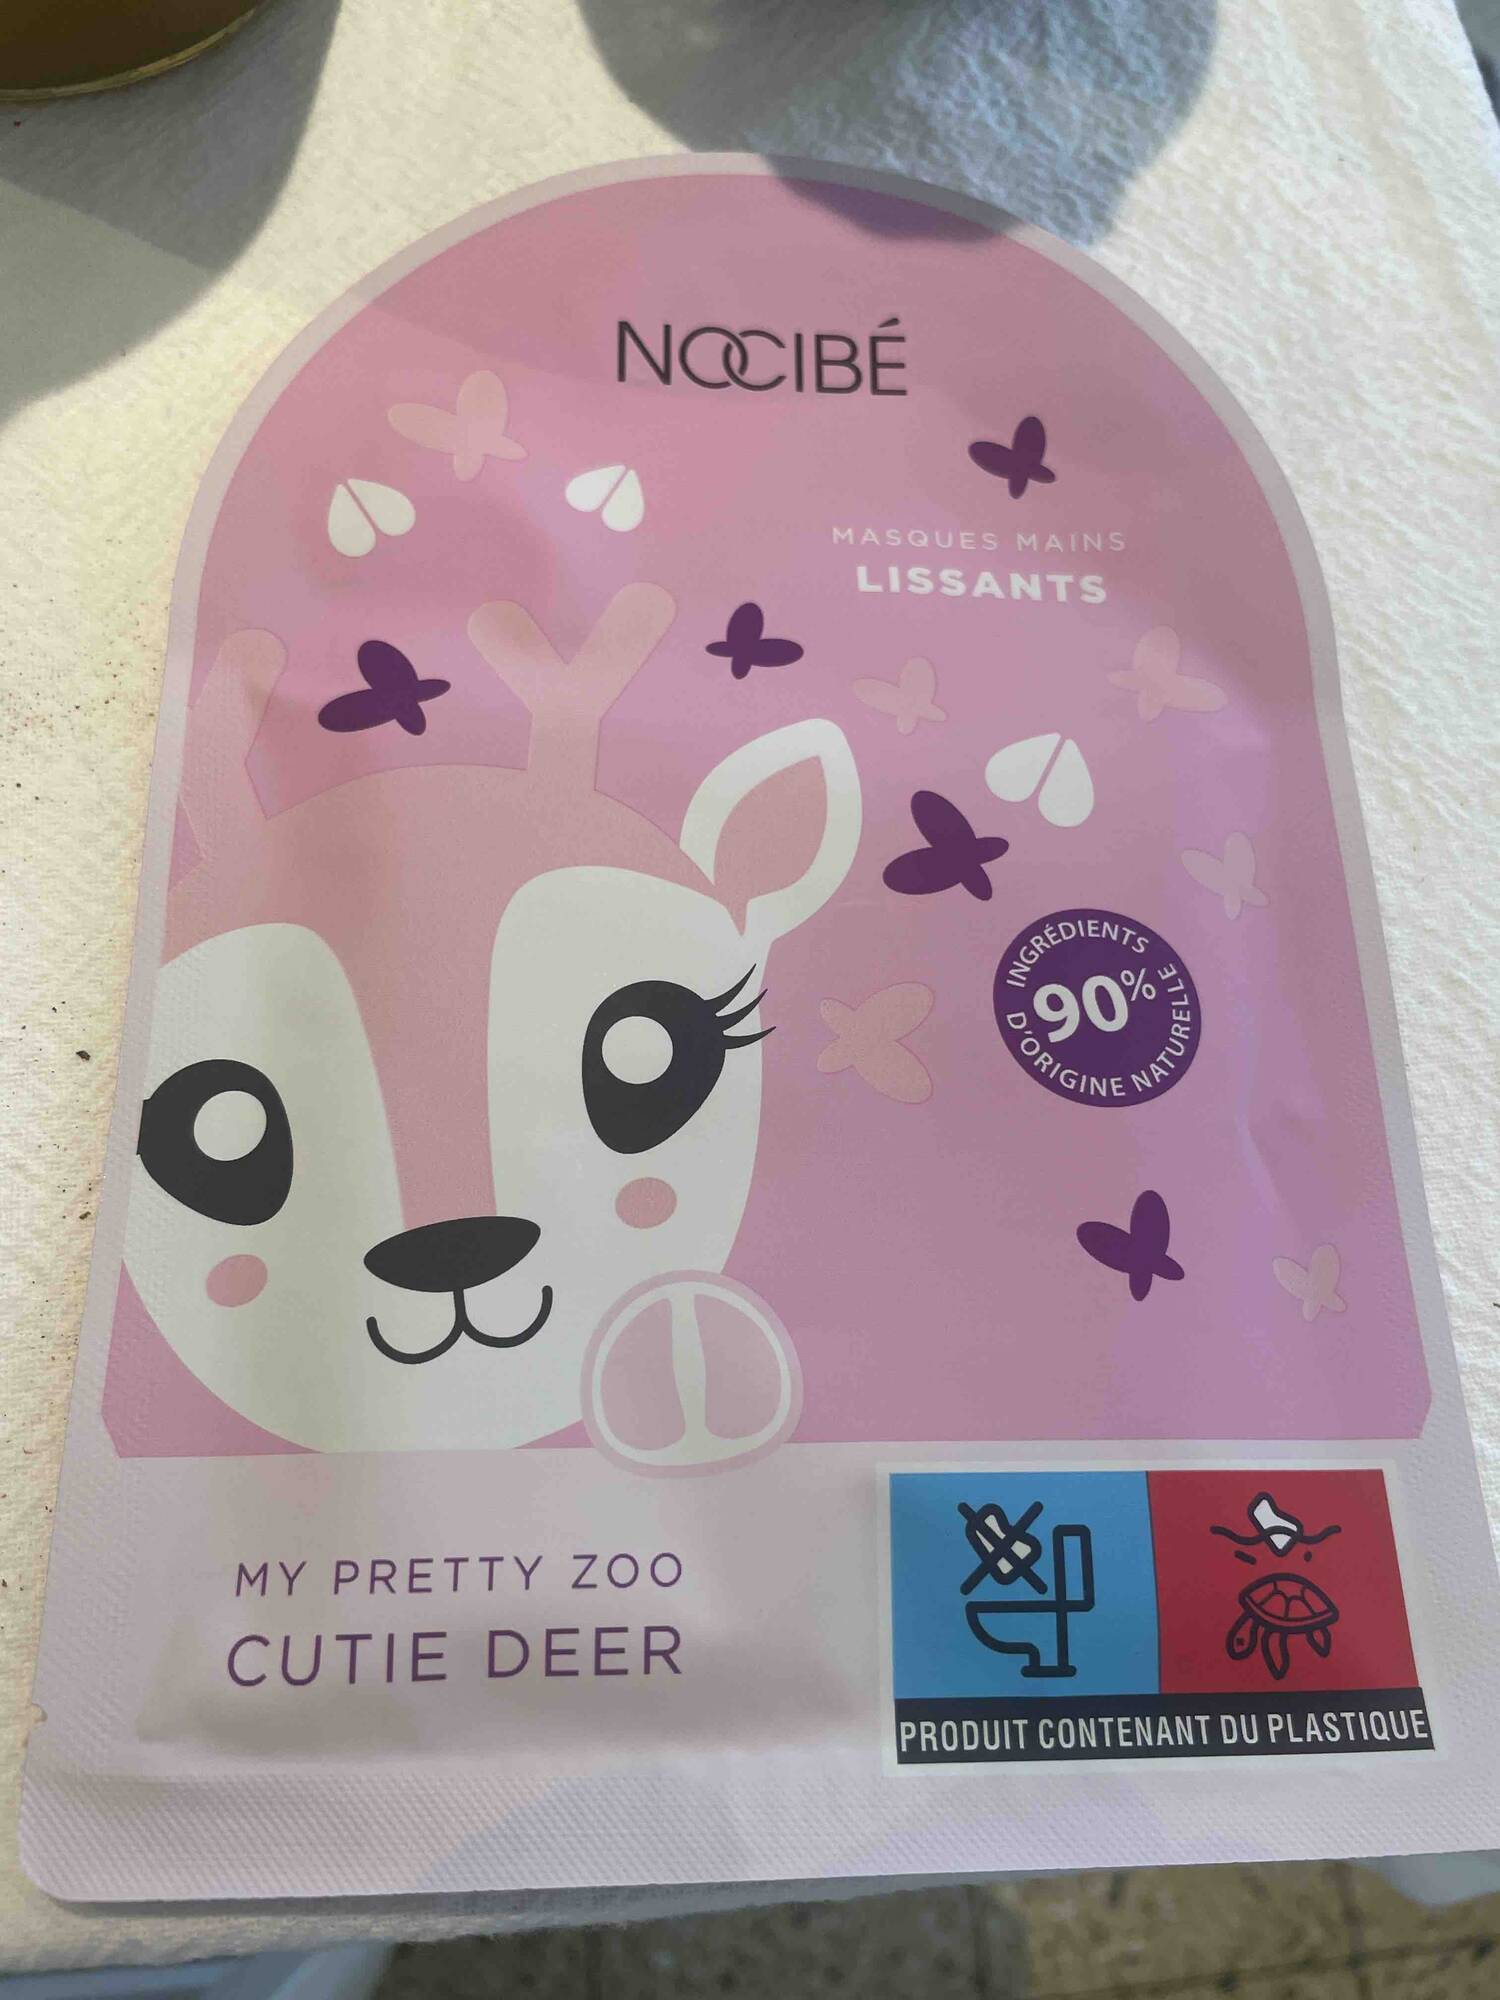 NOCIBÉ - My pretty zoo Cutie deer - Masque mains lissants